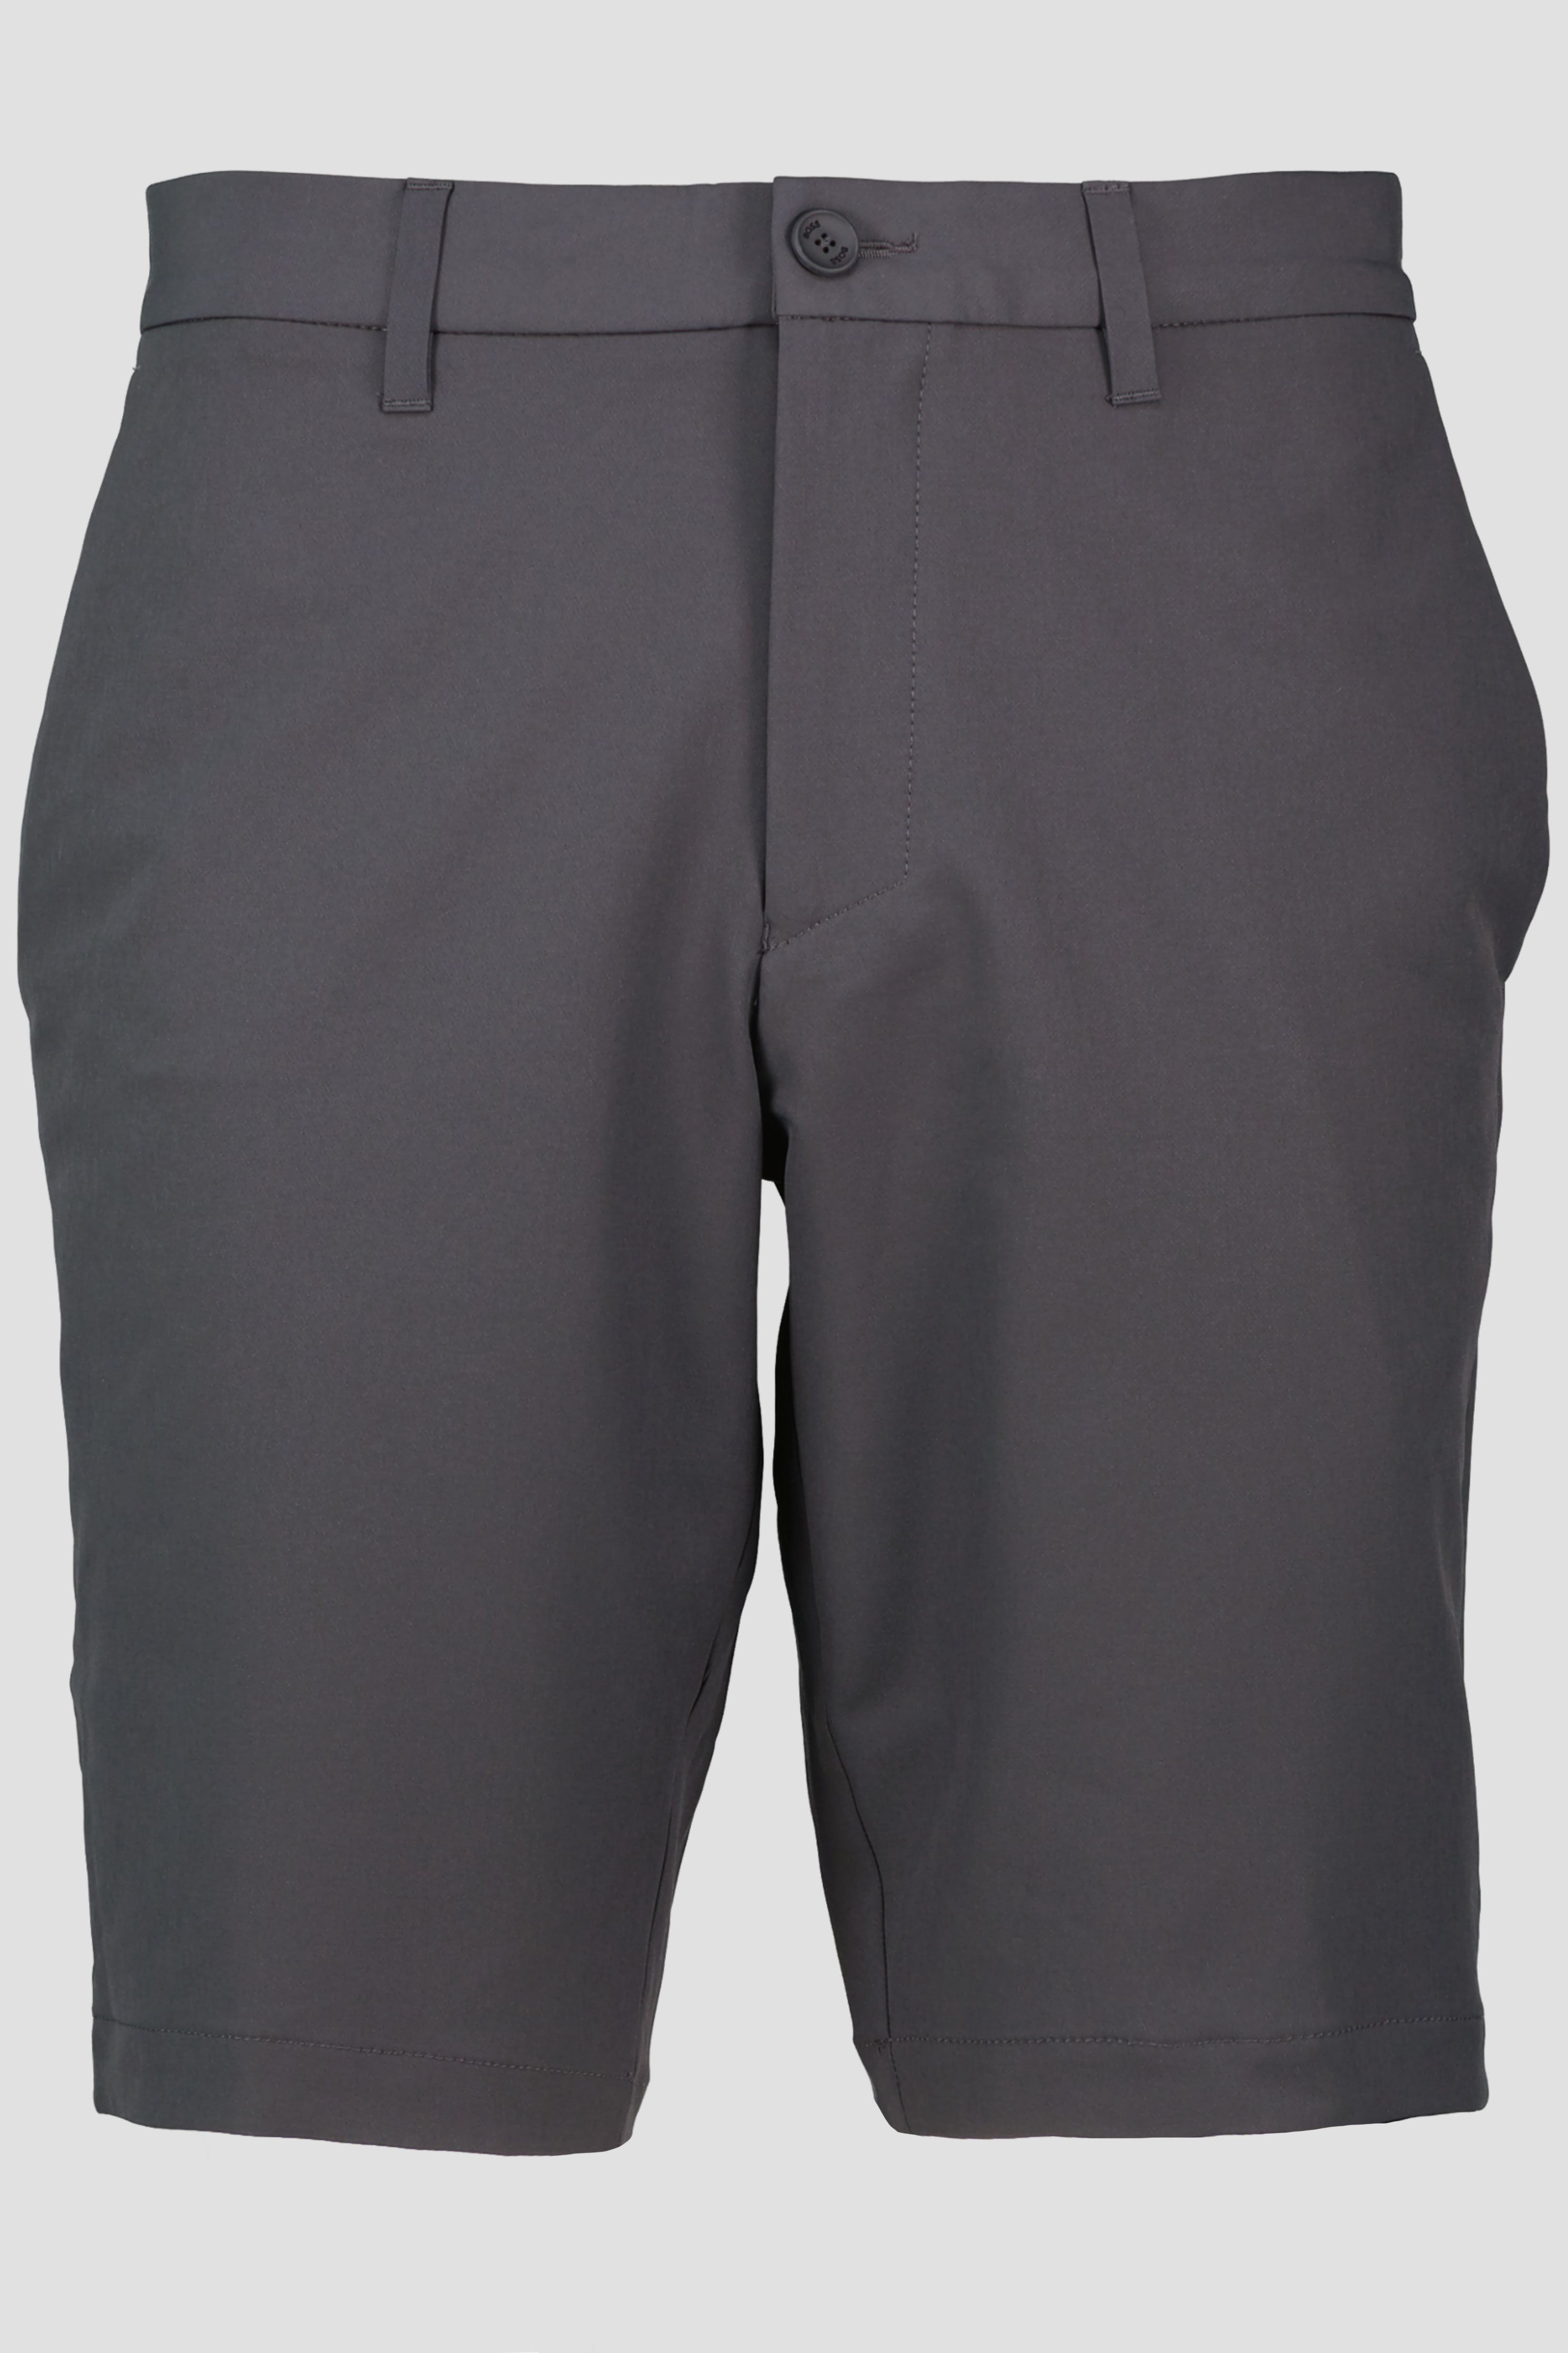 Men's BOSS Green S Commuter Slim Fit Charcoal Shorts